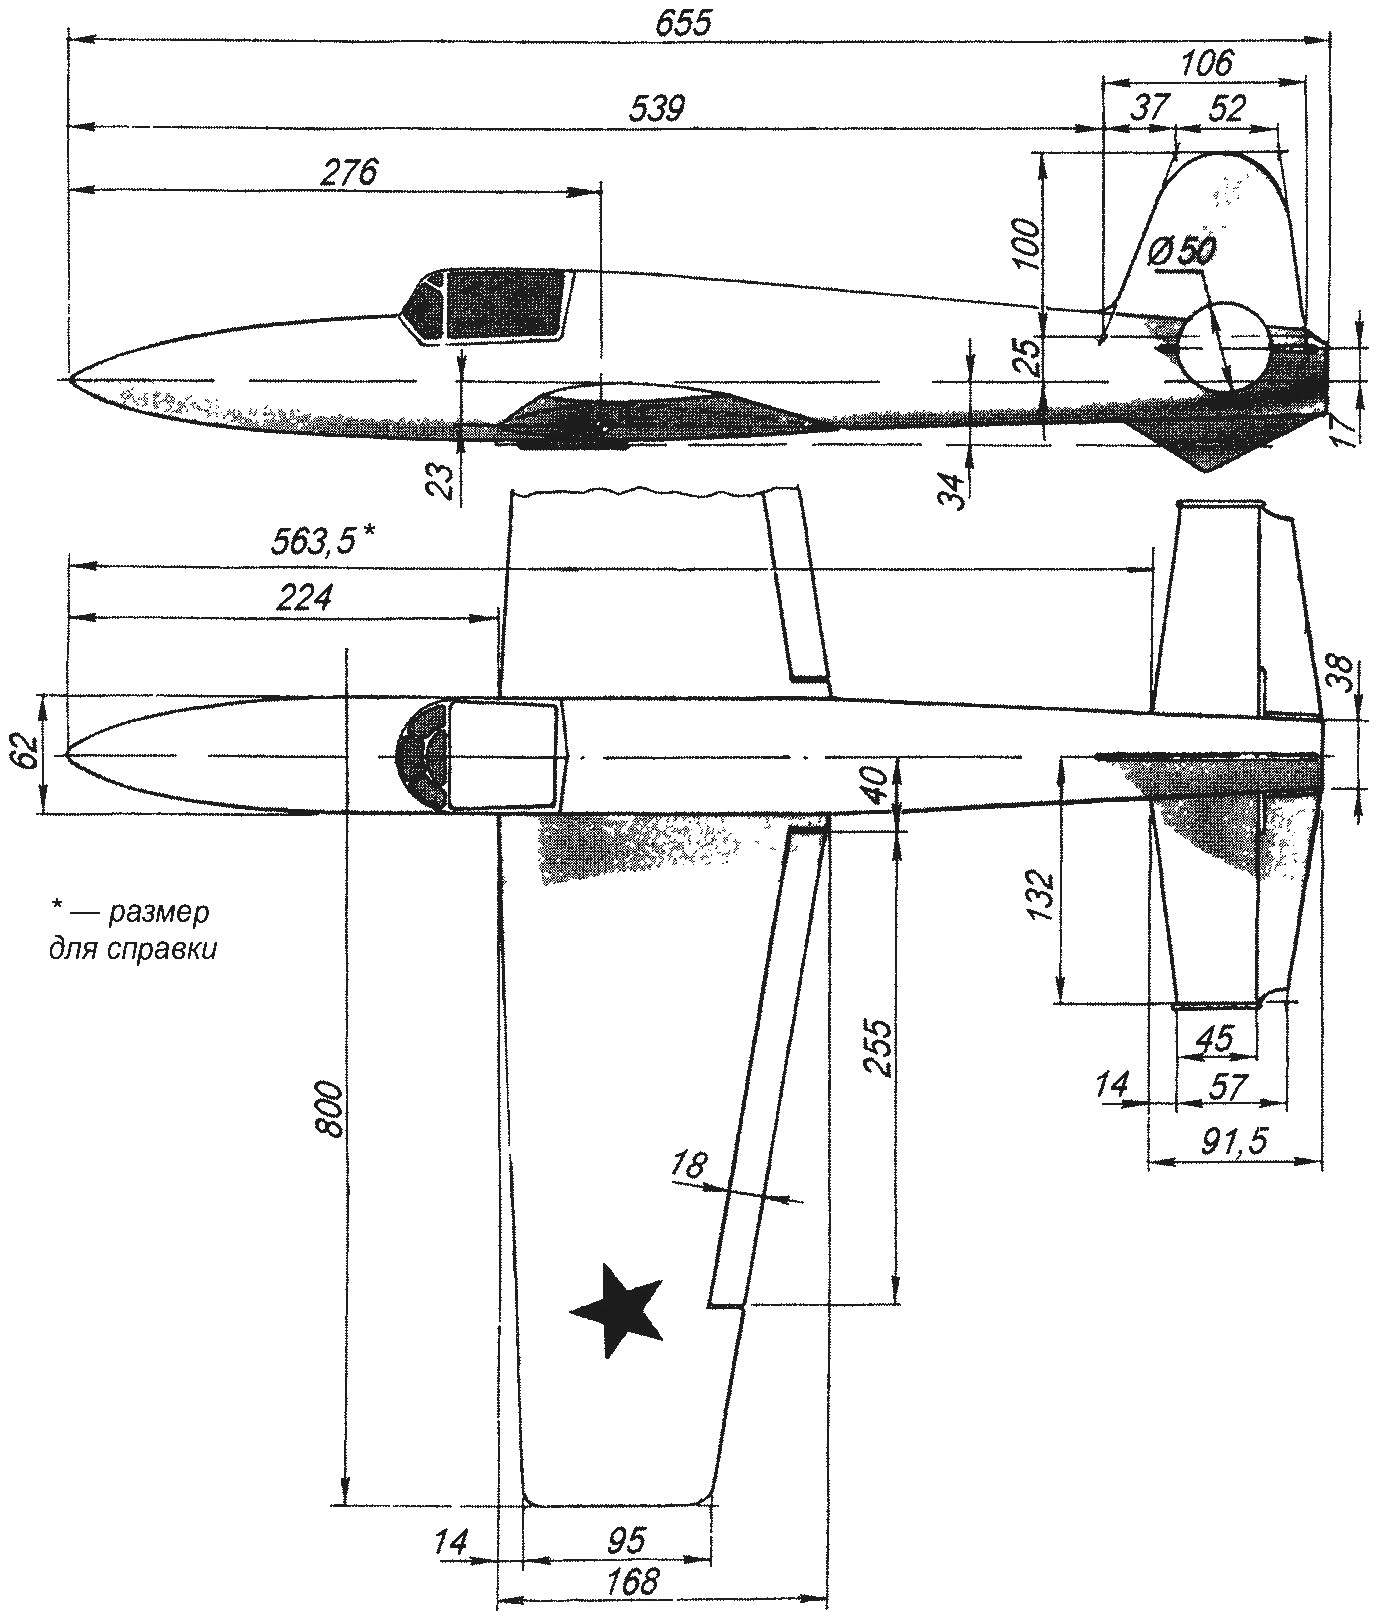 Geometric scheme of radio-controlled models-copies of a rocket fighter-interceptor BI-1